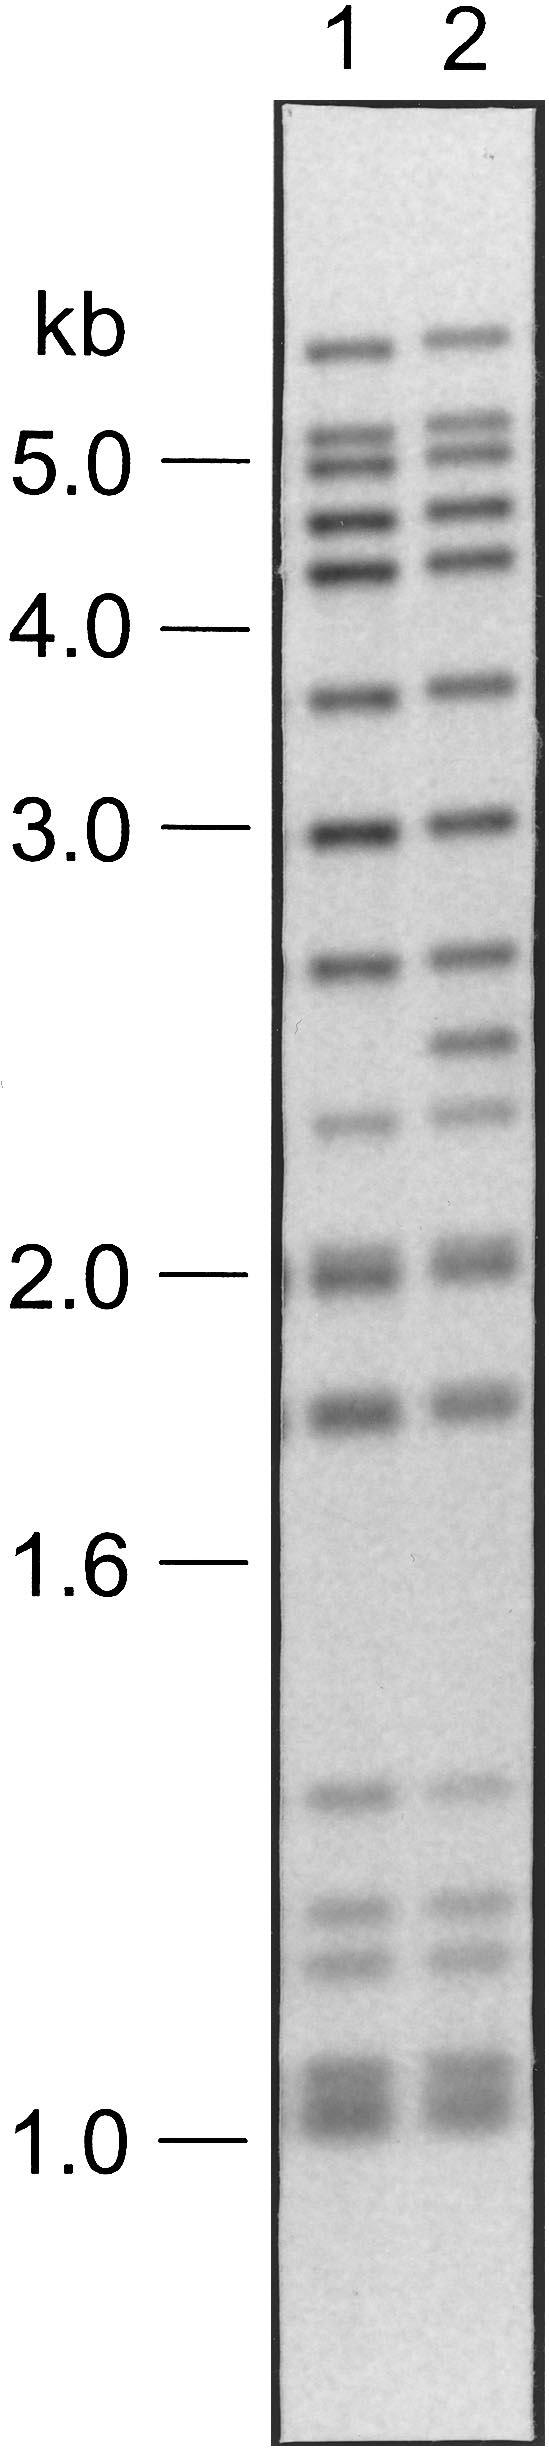 86 Agerton et al. CID 1999;29 (July) Figure 1. DNA fingerprints of Mycobacterium tuberculosis strains W and W1.